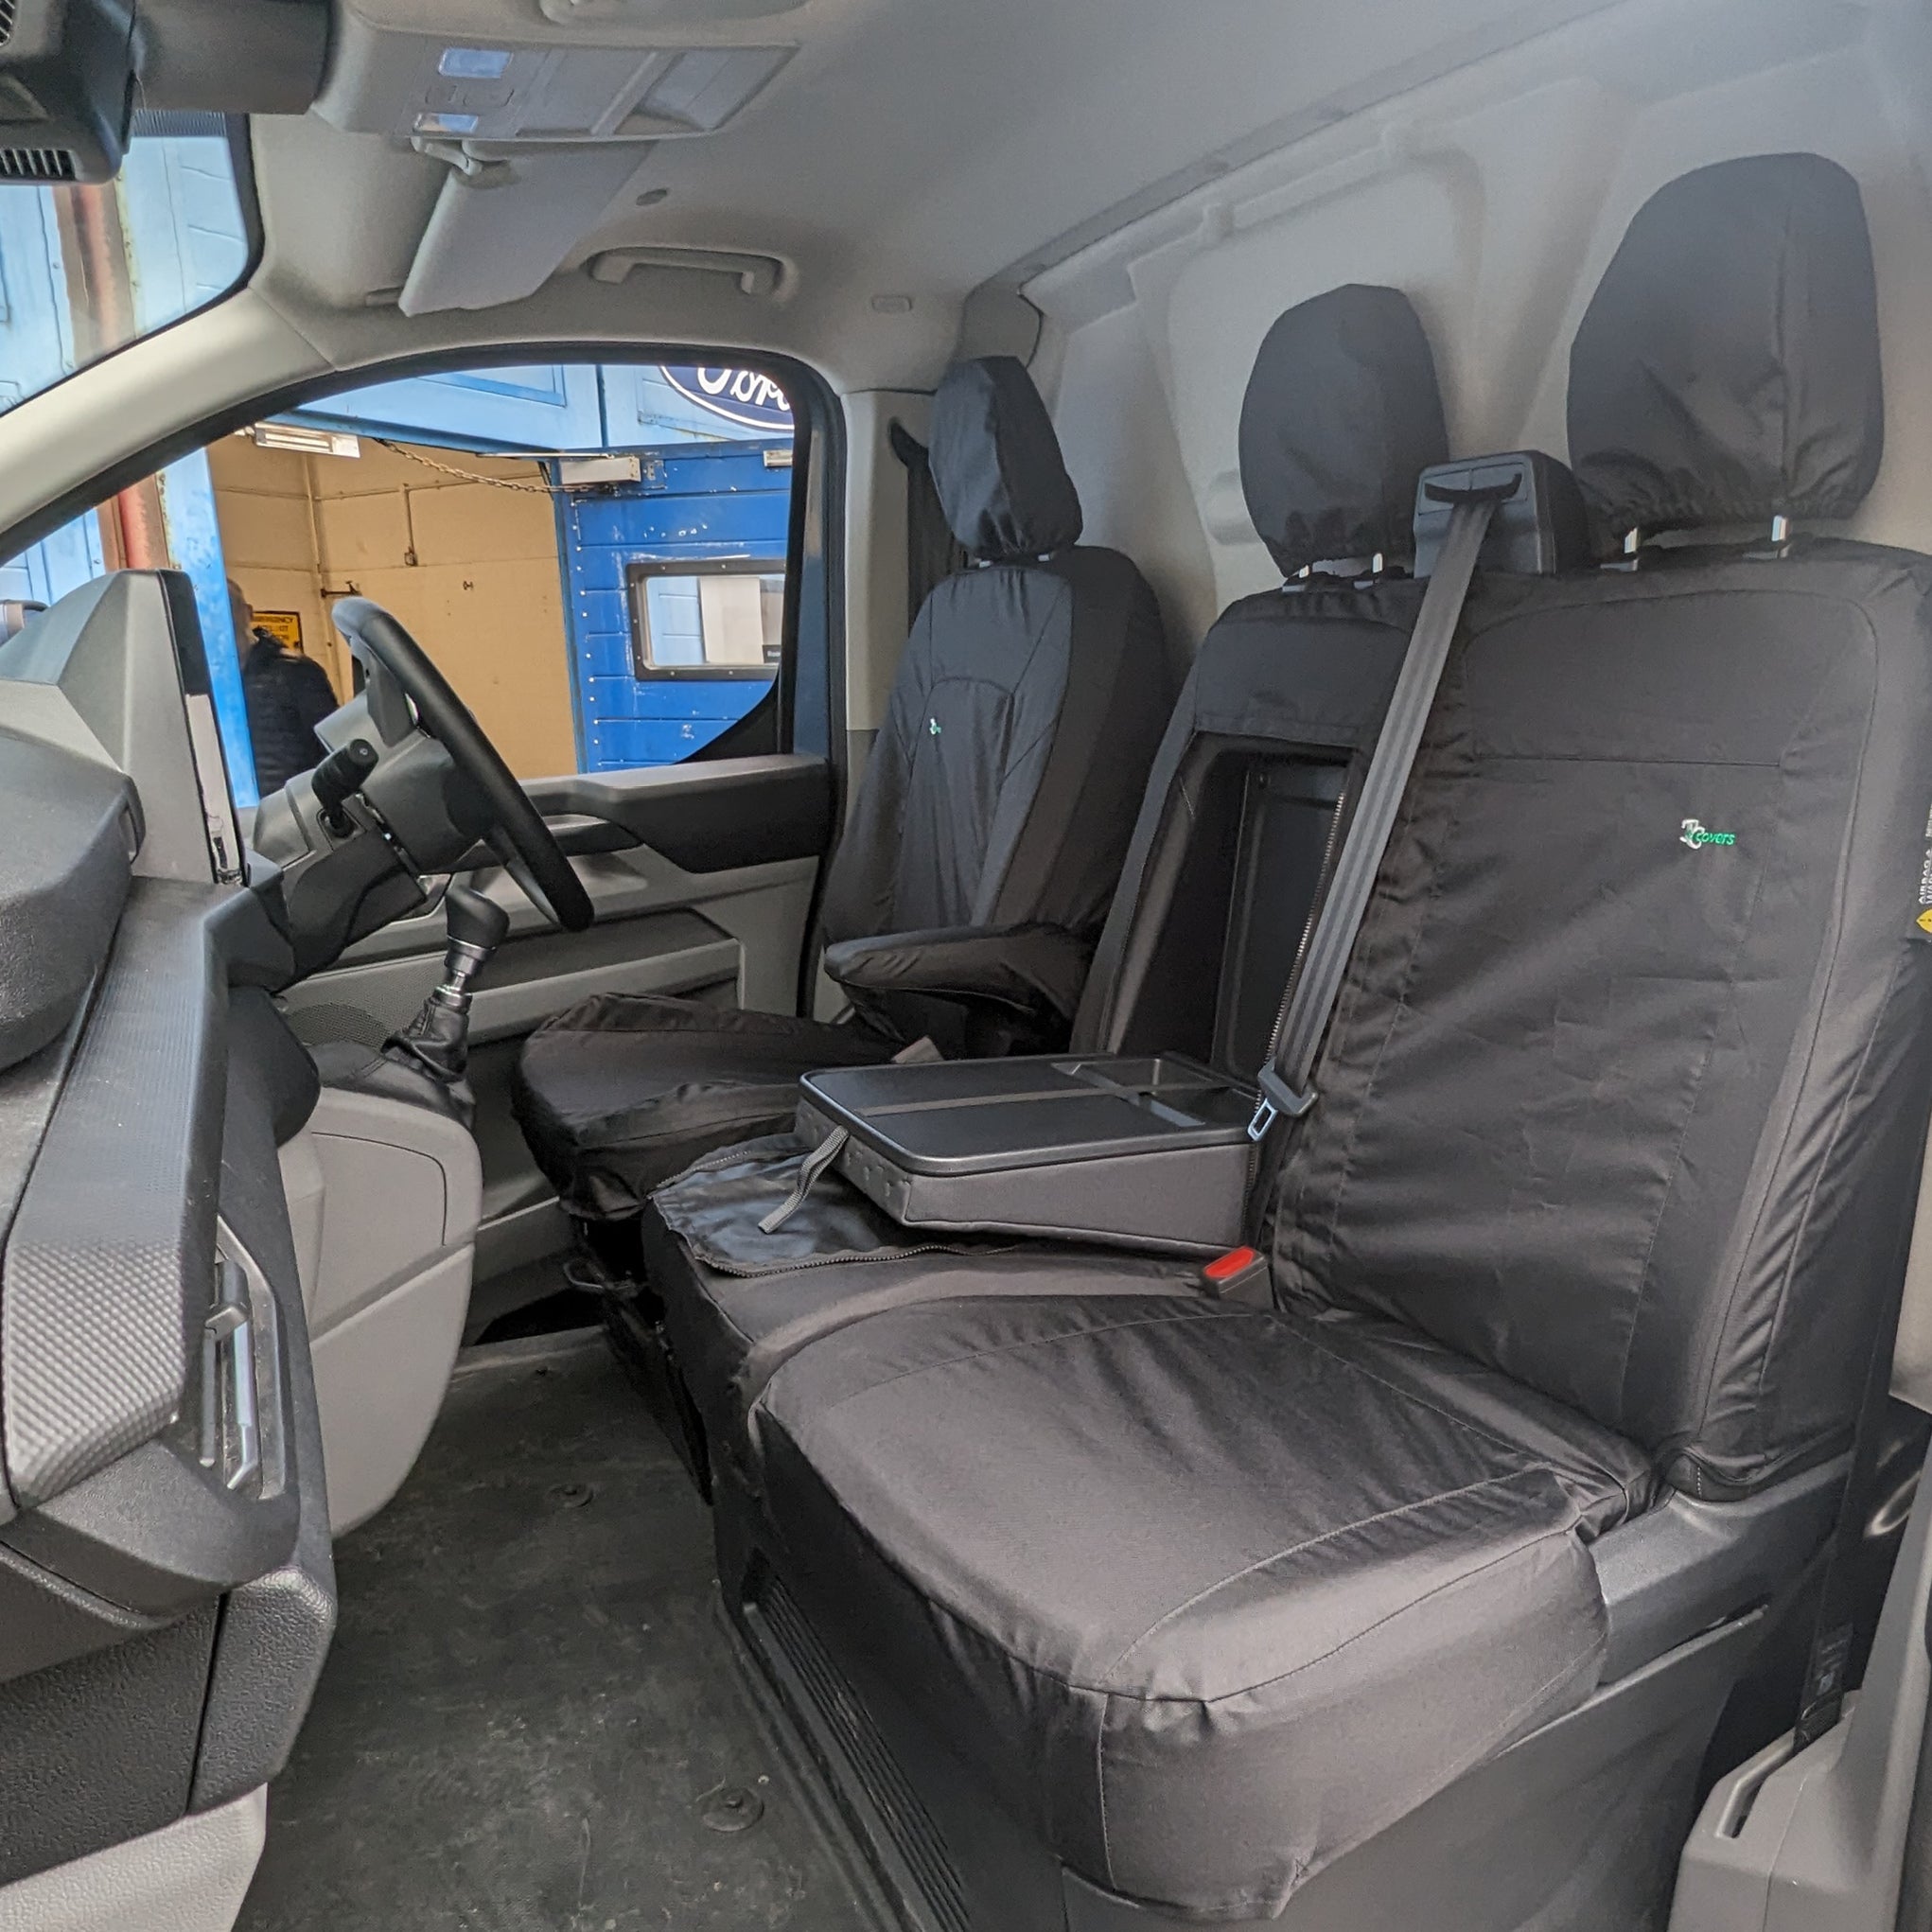 All-New Transit Custom Seat Covers